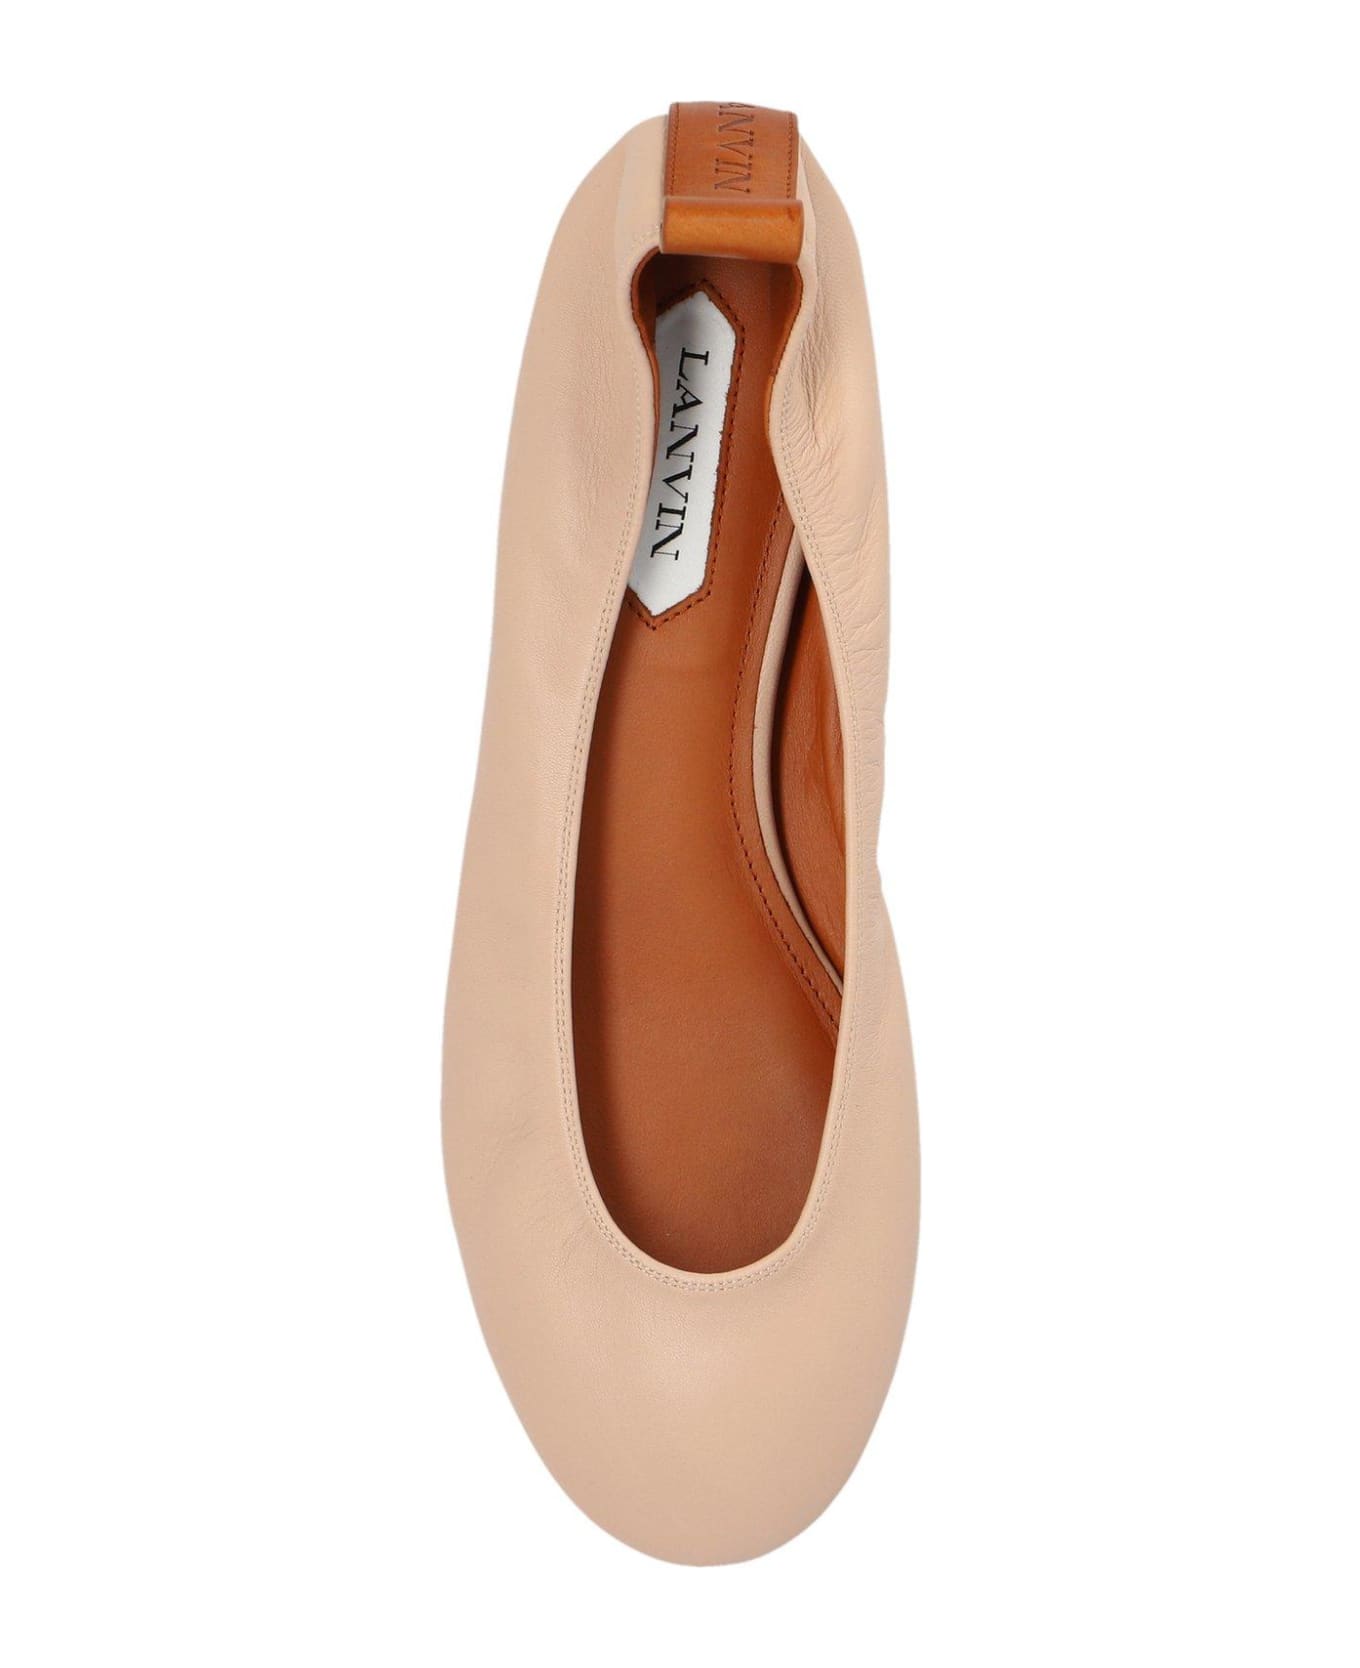 Lanvin Ruch Detailed Slip-on Ballerina Shoes - Beige